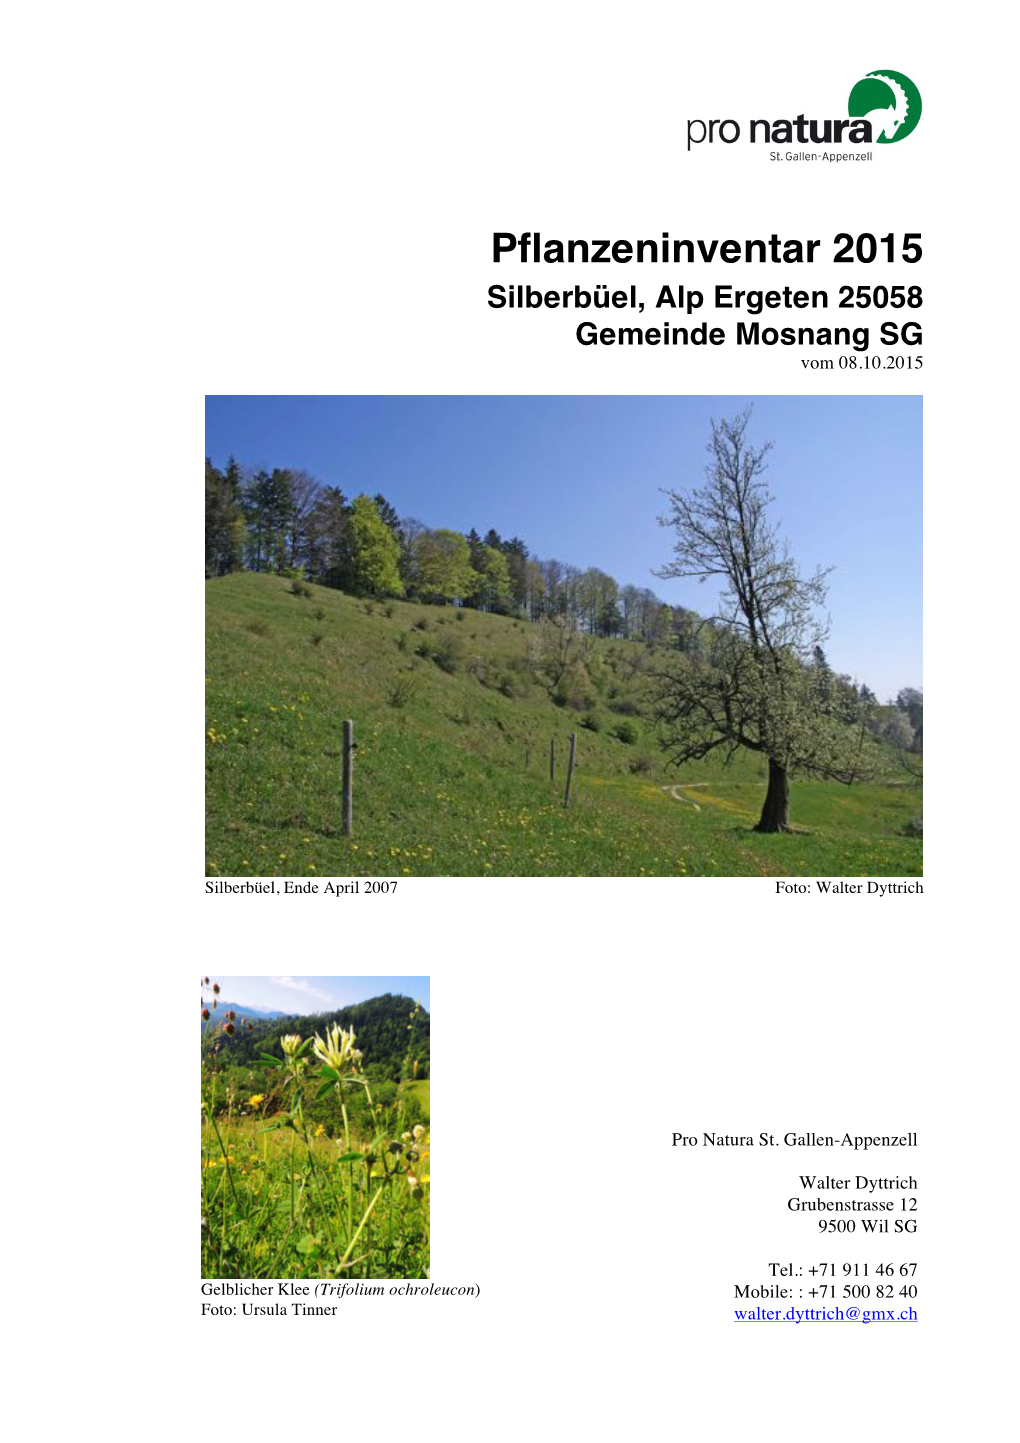 Pflanzeninventar Silberbüel 2015